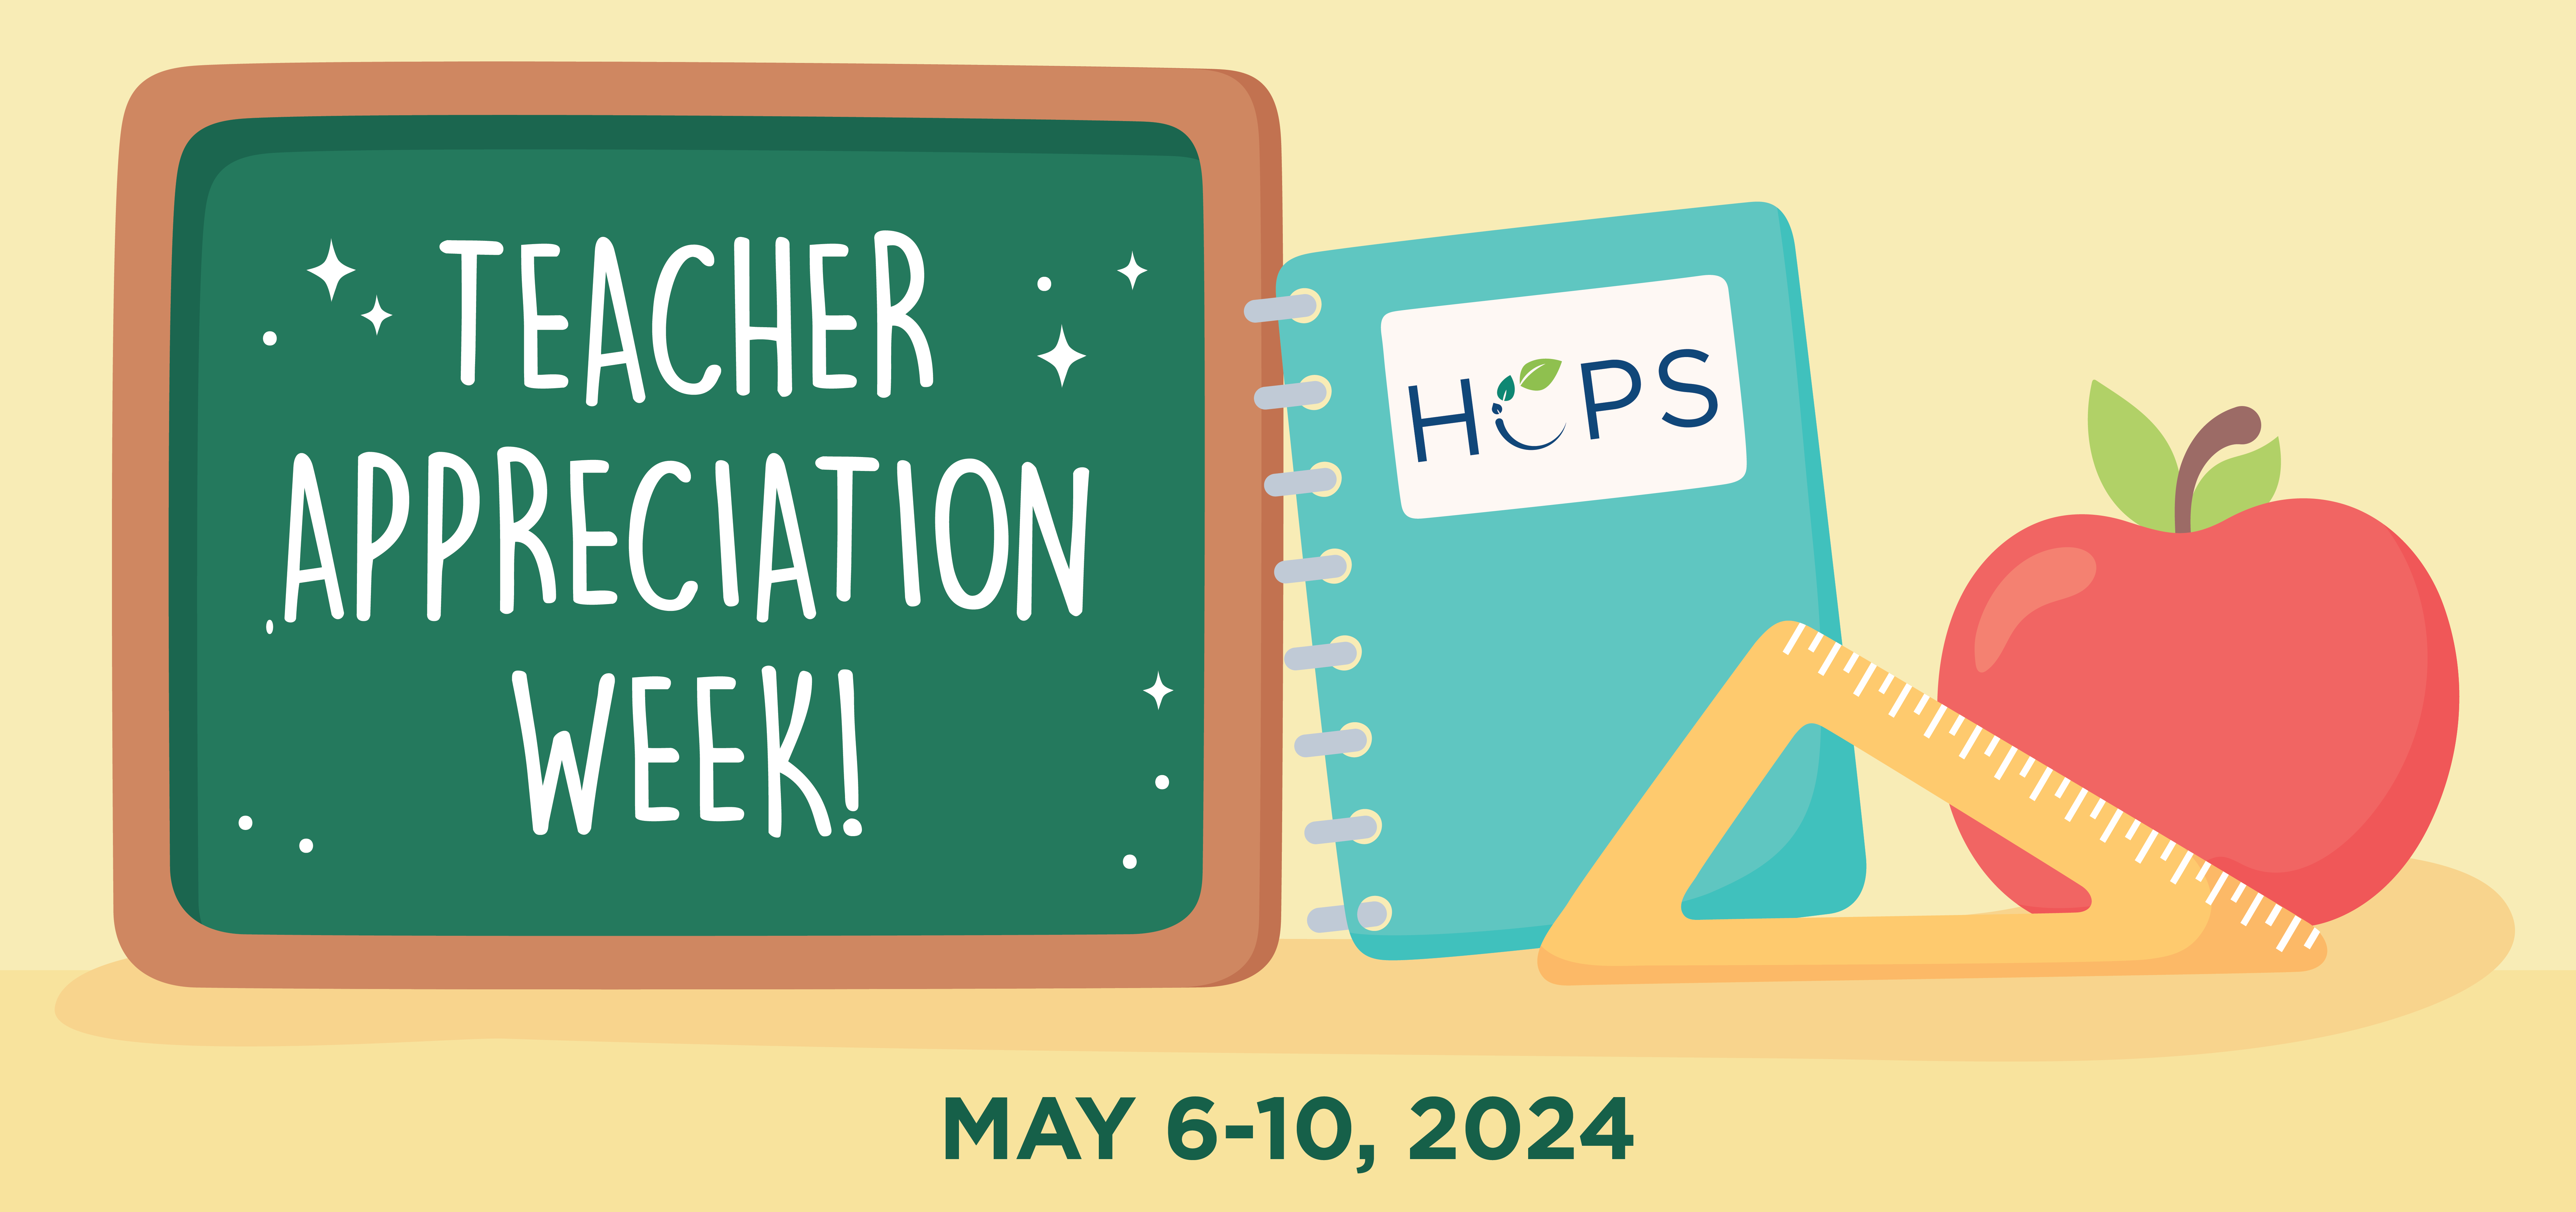 Teacher Appreciation Week is May 6-10, 2024.